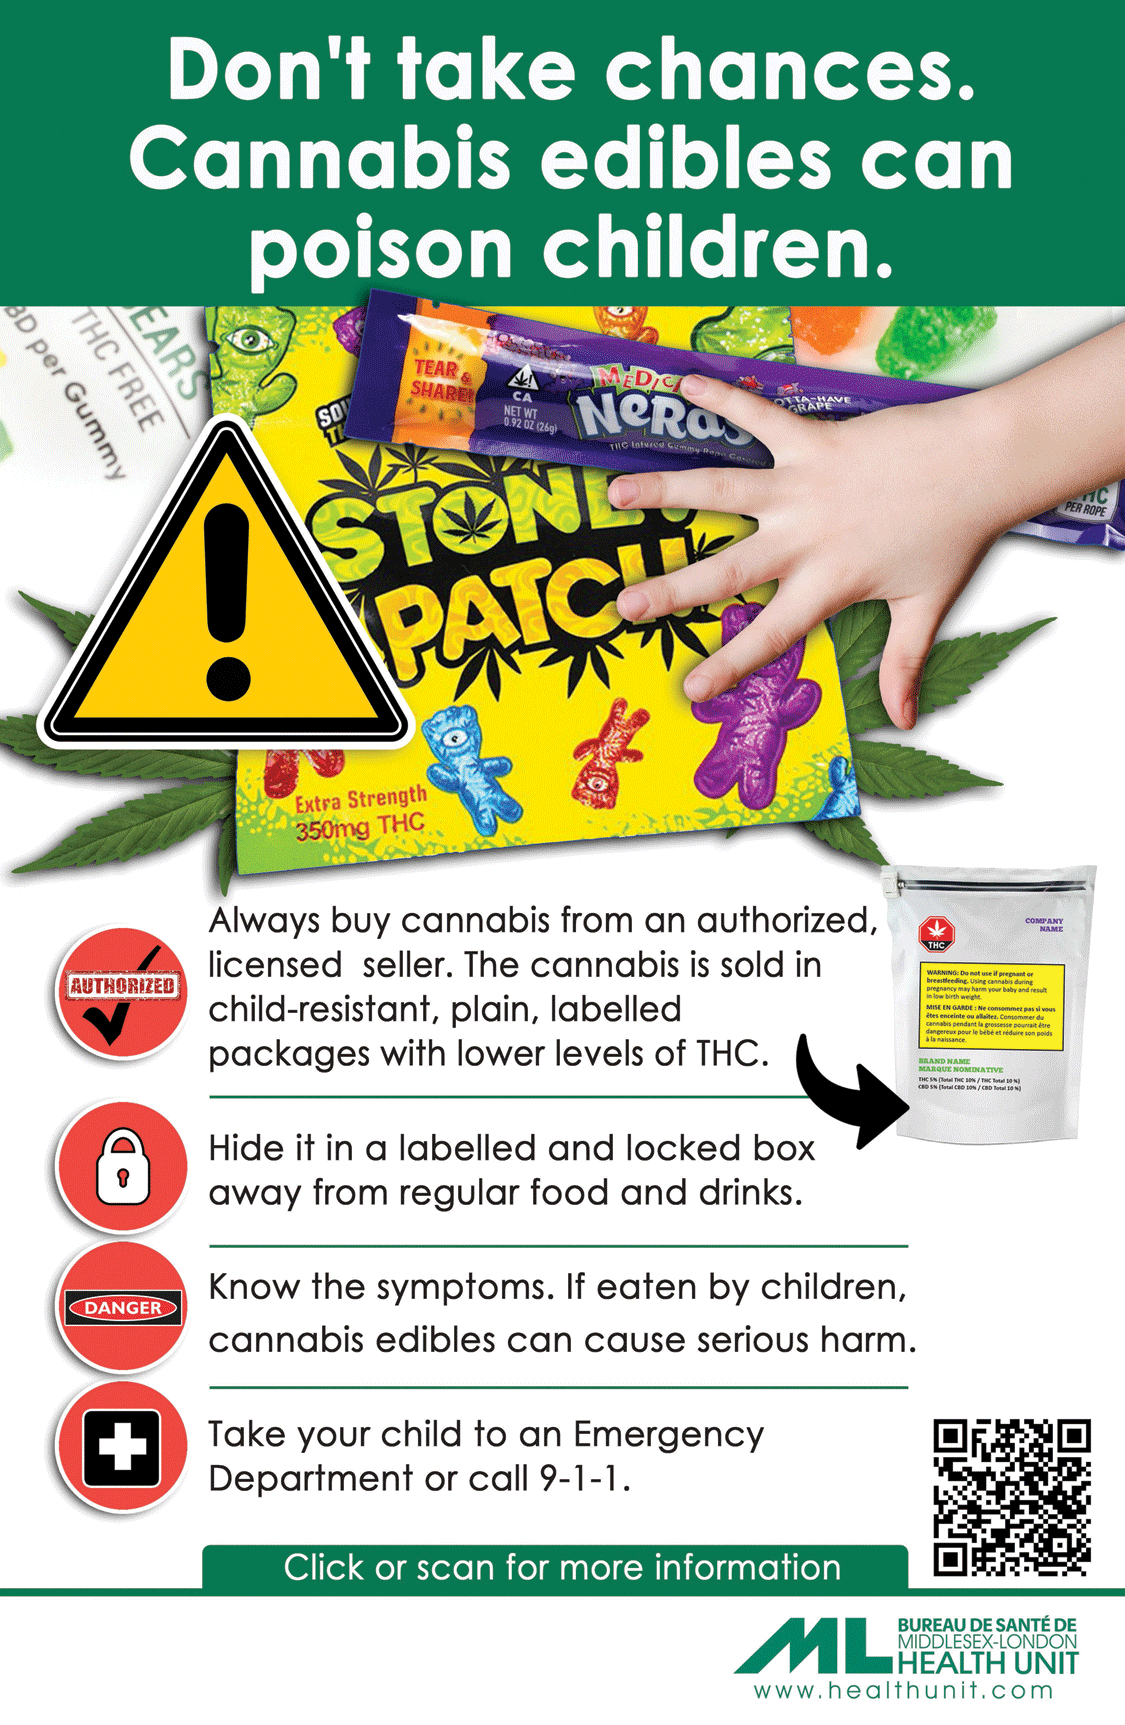 Don’t take chances. Cannabis edibles can poison children.